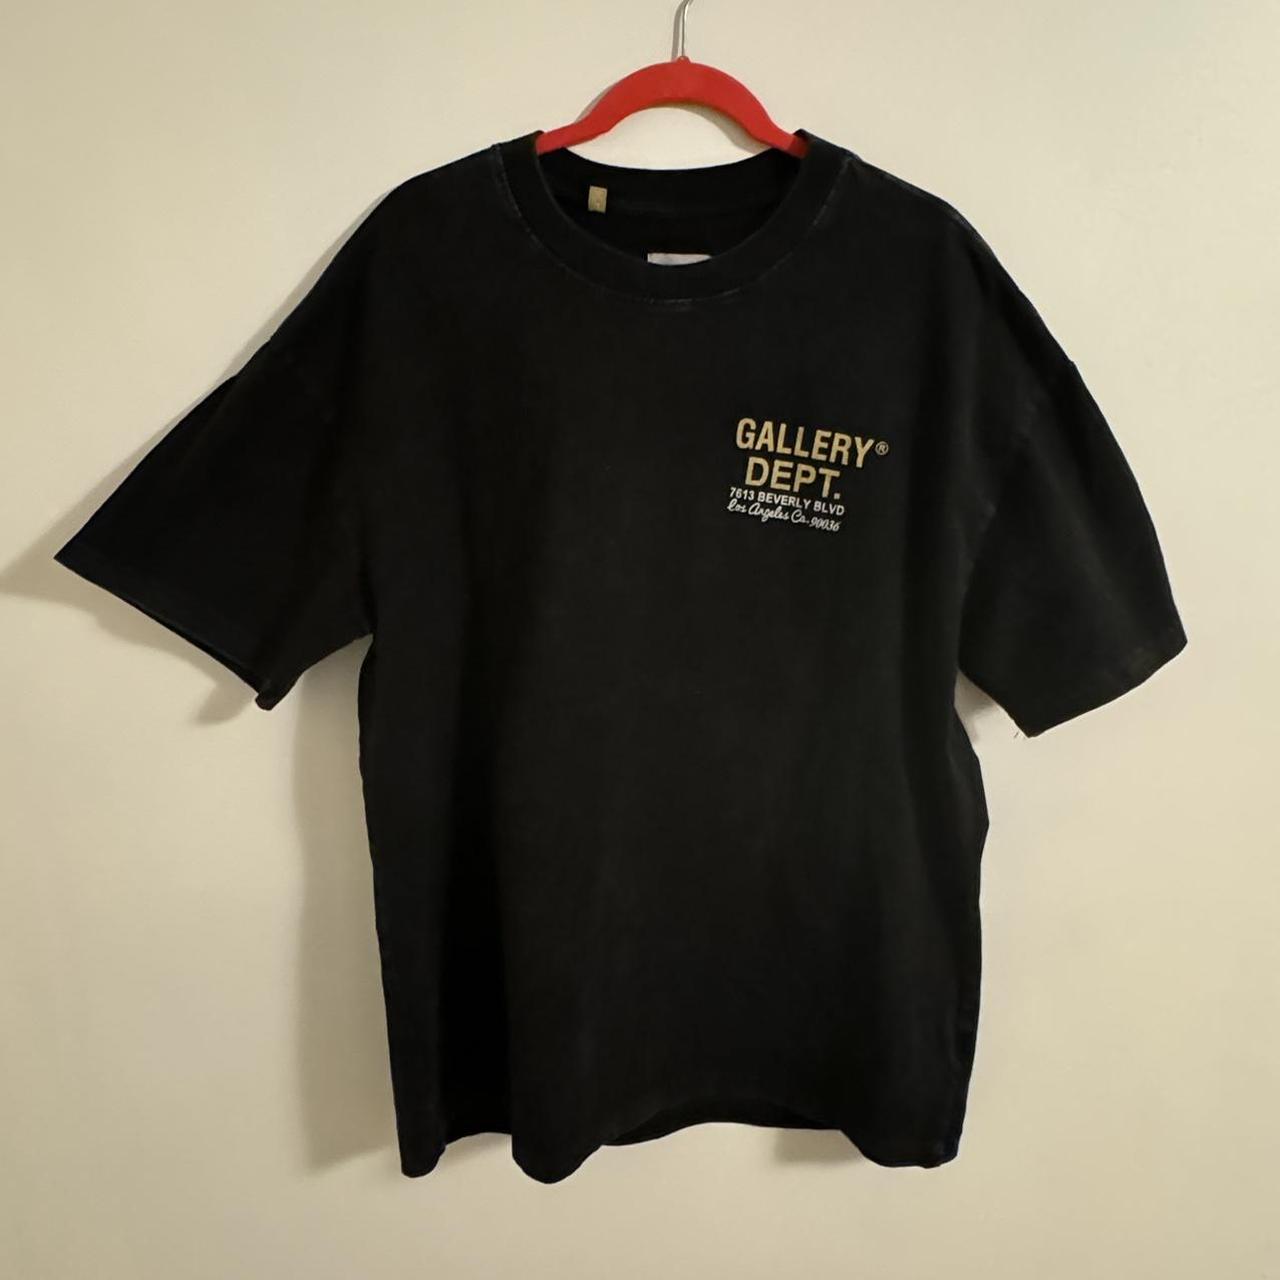 Gallery dept tshirt - Depop